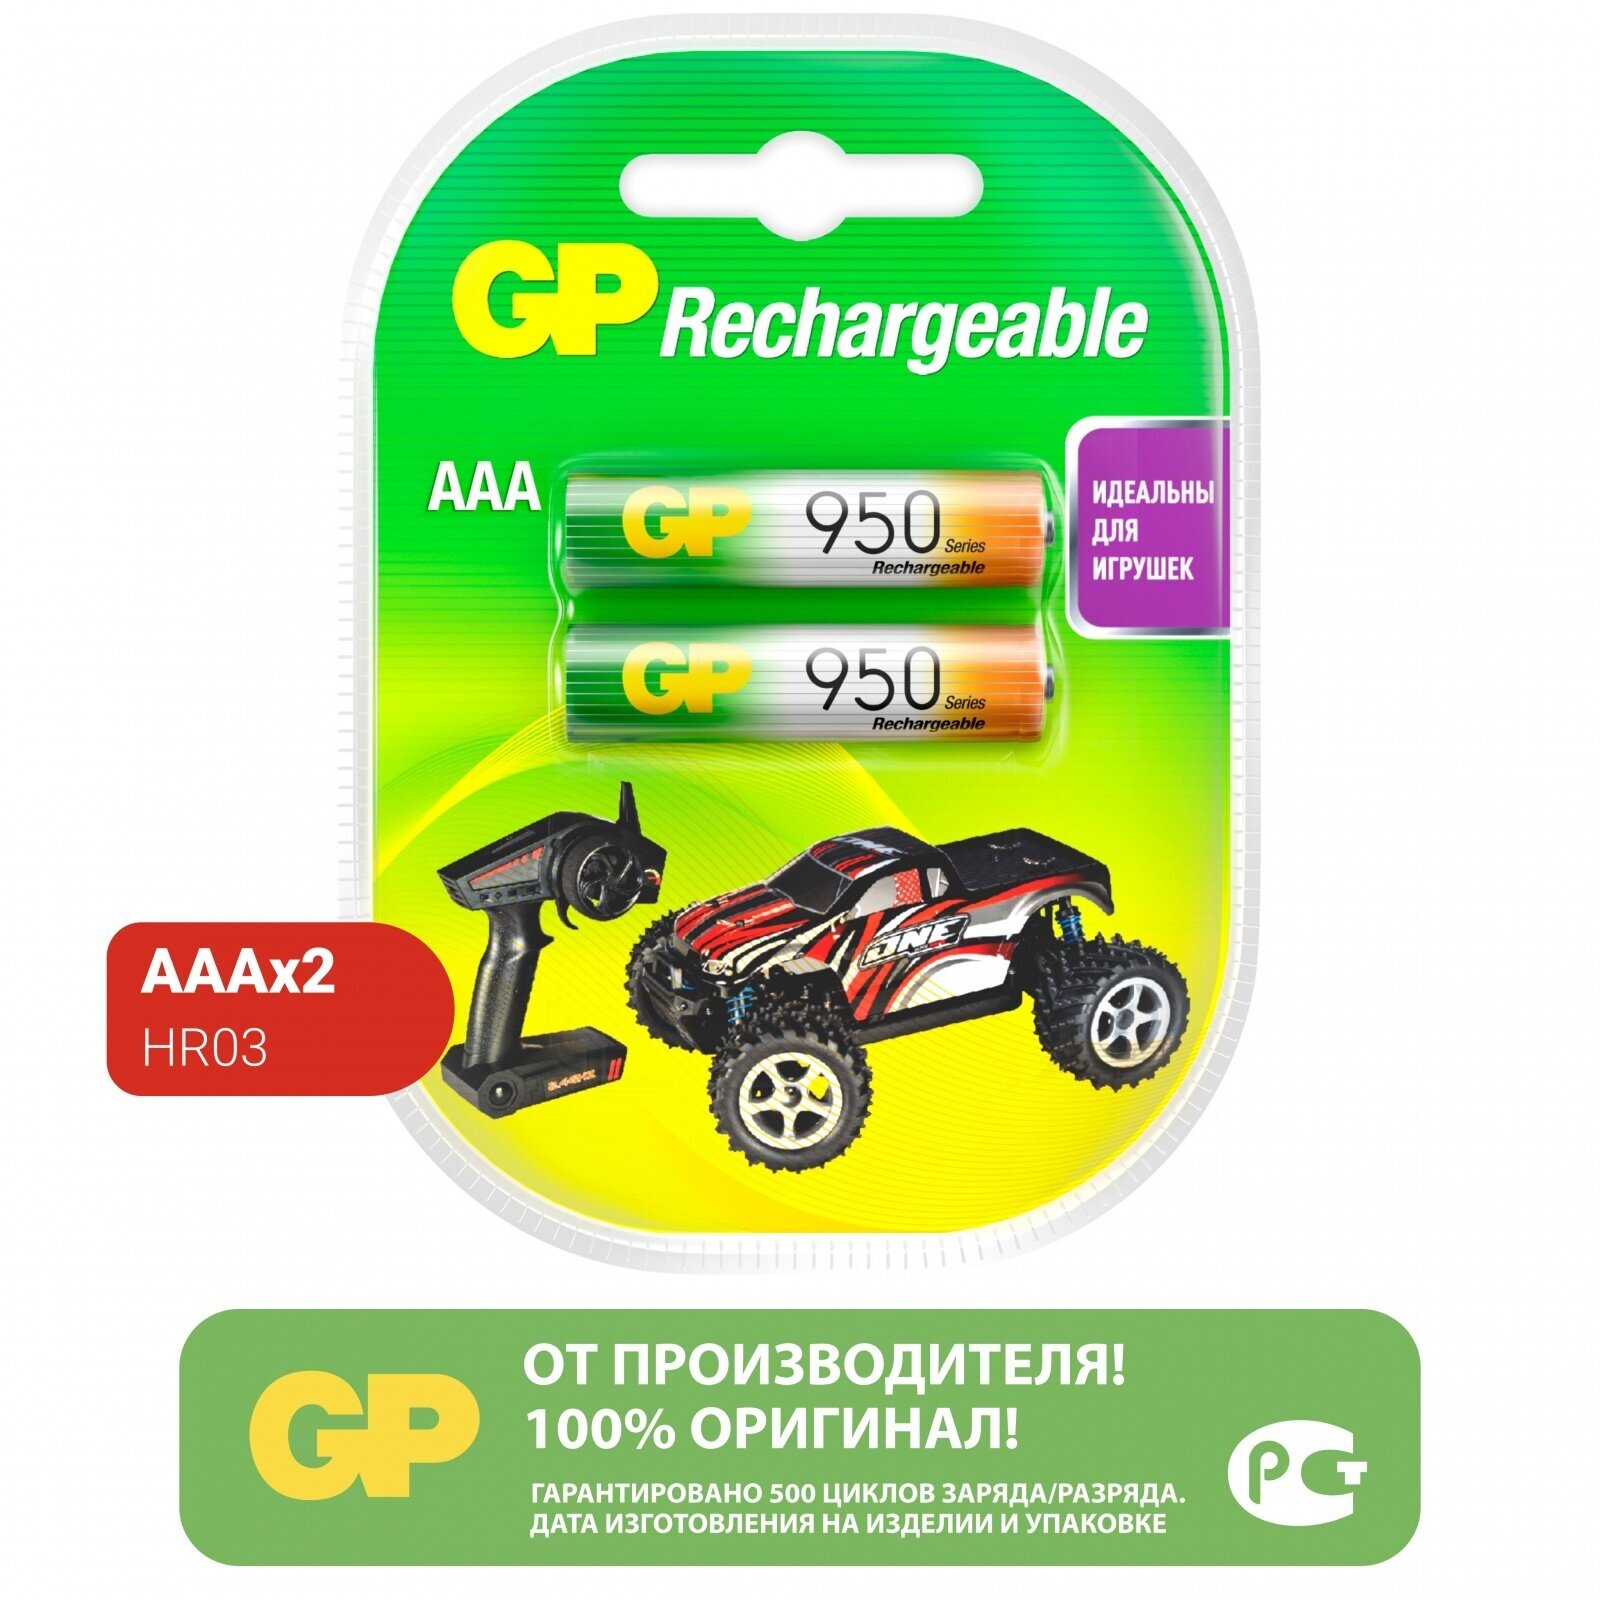 Батарейки ААА аккумуляторные GP, перезаряжаемые аккумуляторы, 950 мАч, 1.2 В, набор 2 шт